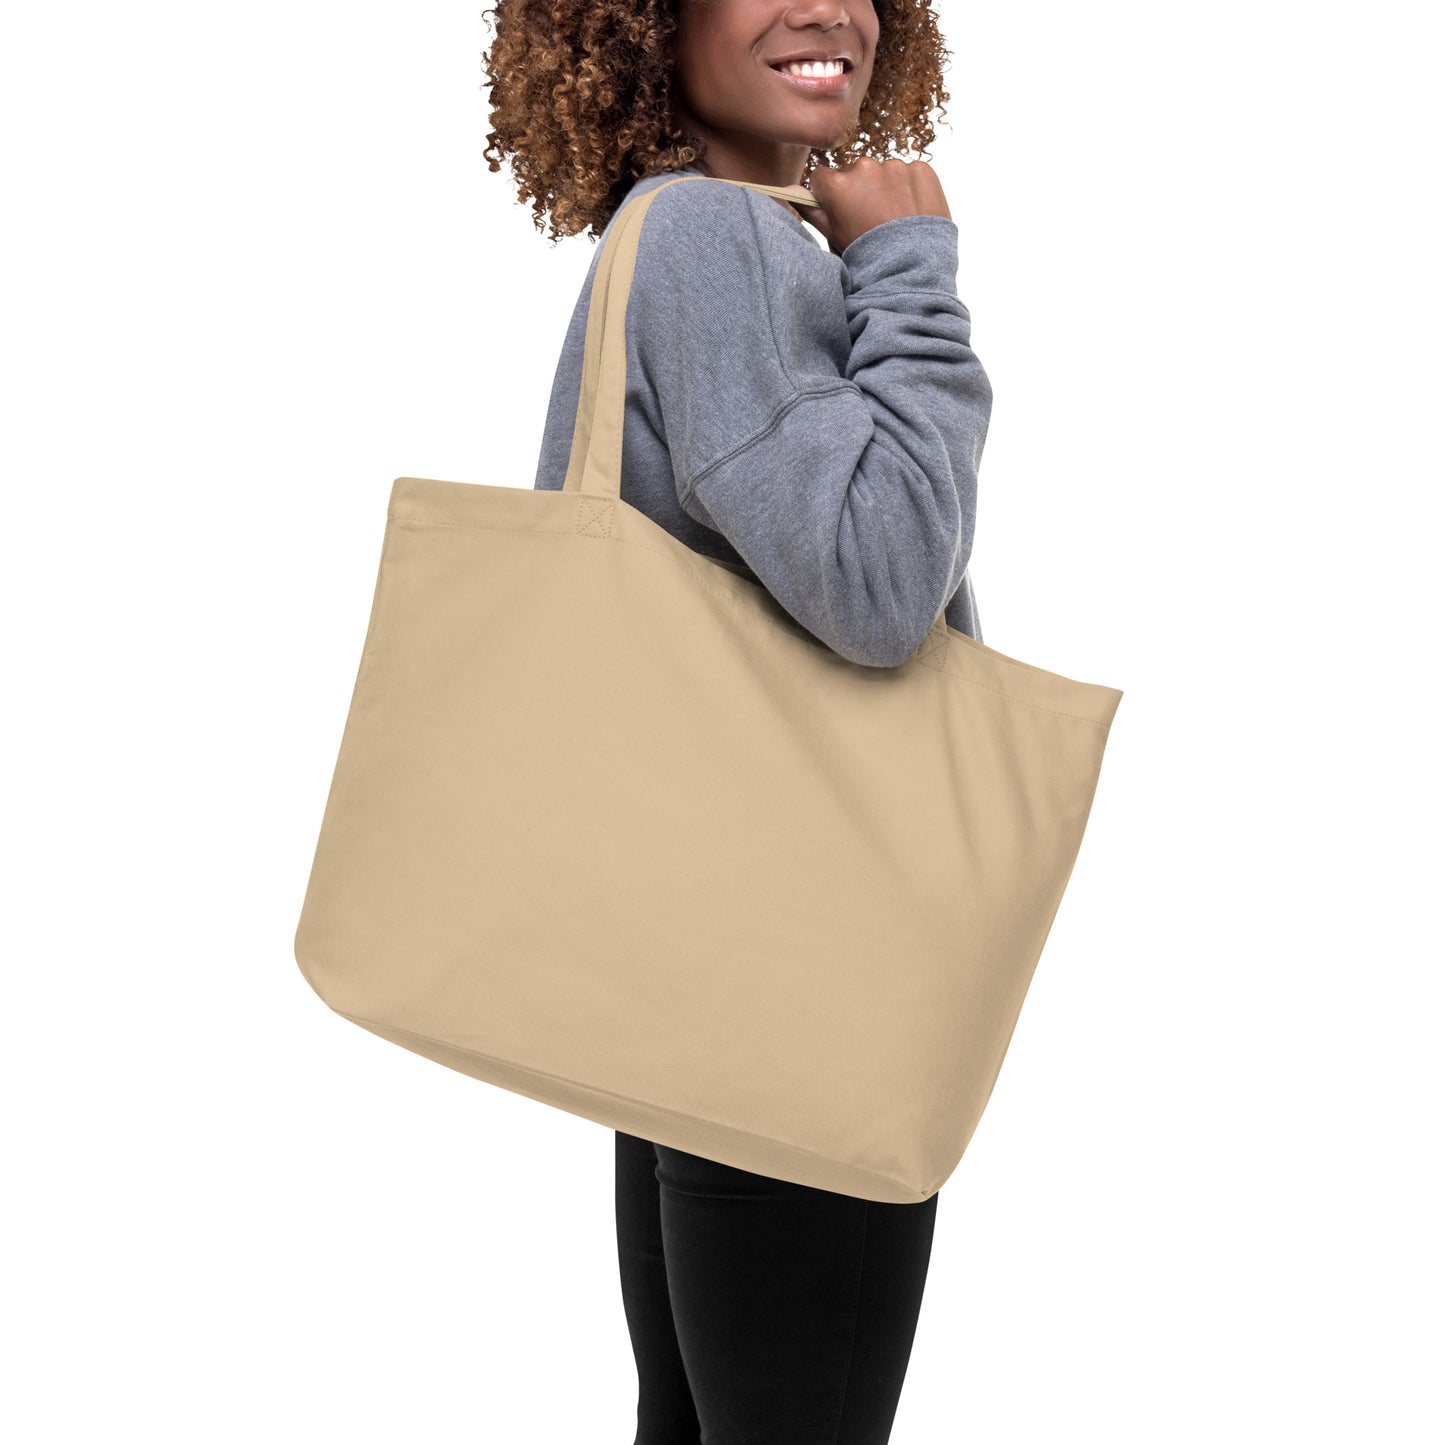 Just a Massachusetts Girl in an Alabama World Large organic tote bag